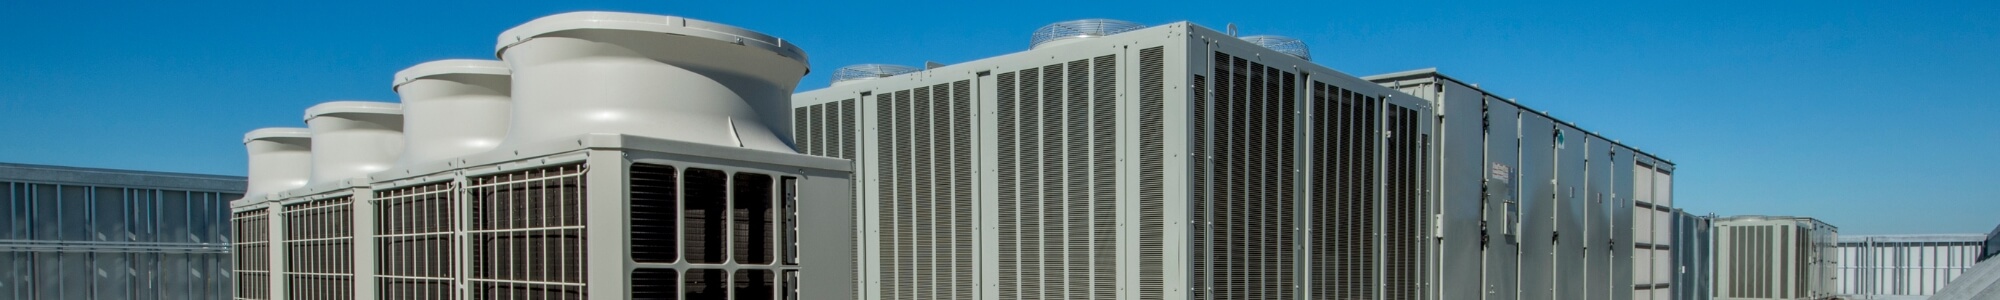 HVAC services in Brampton